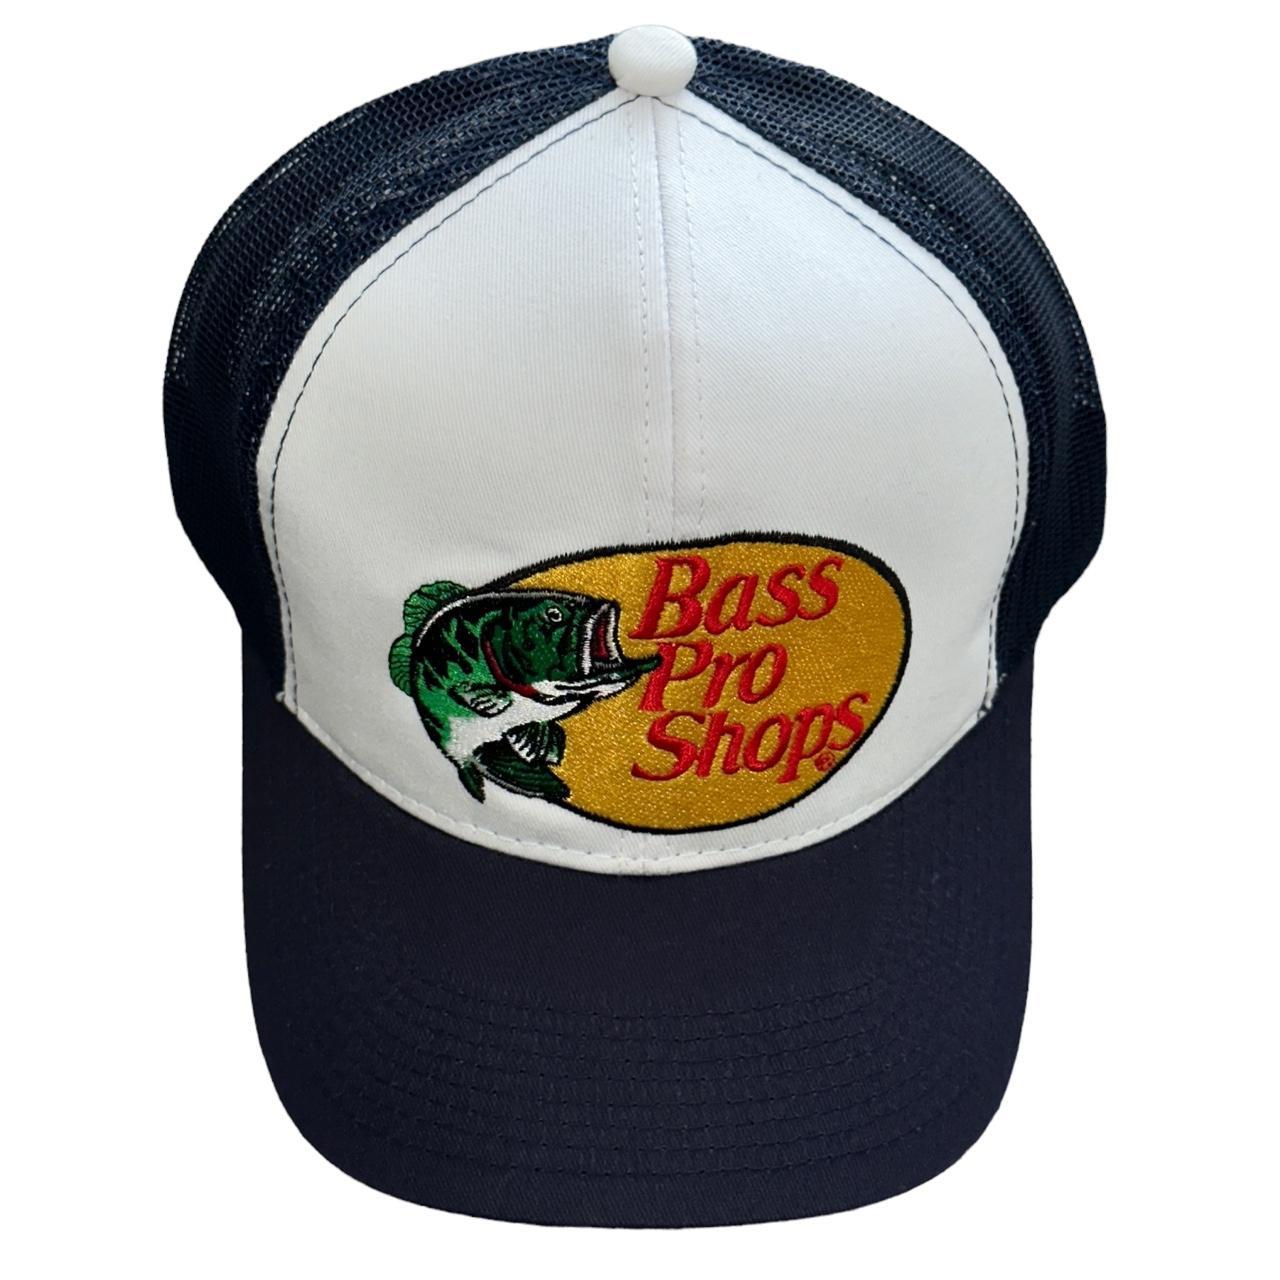 Bass Pro Shops green & white trucker hat - - Depop